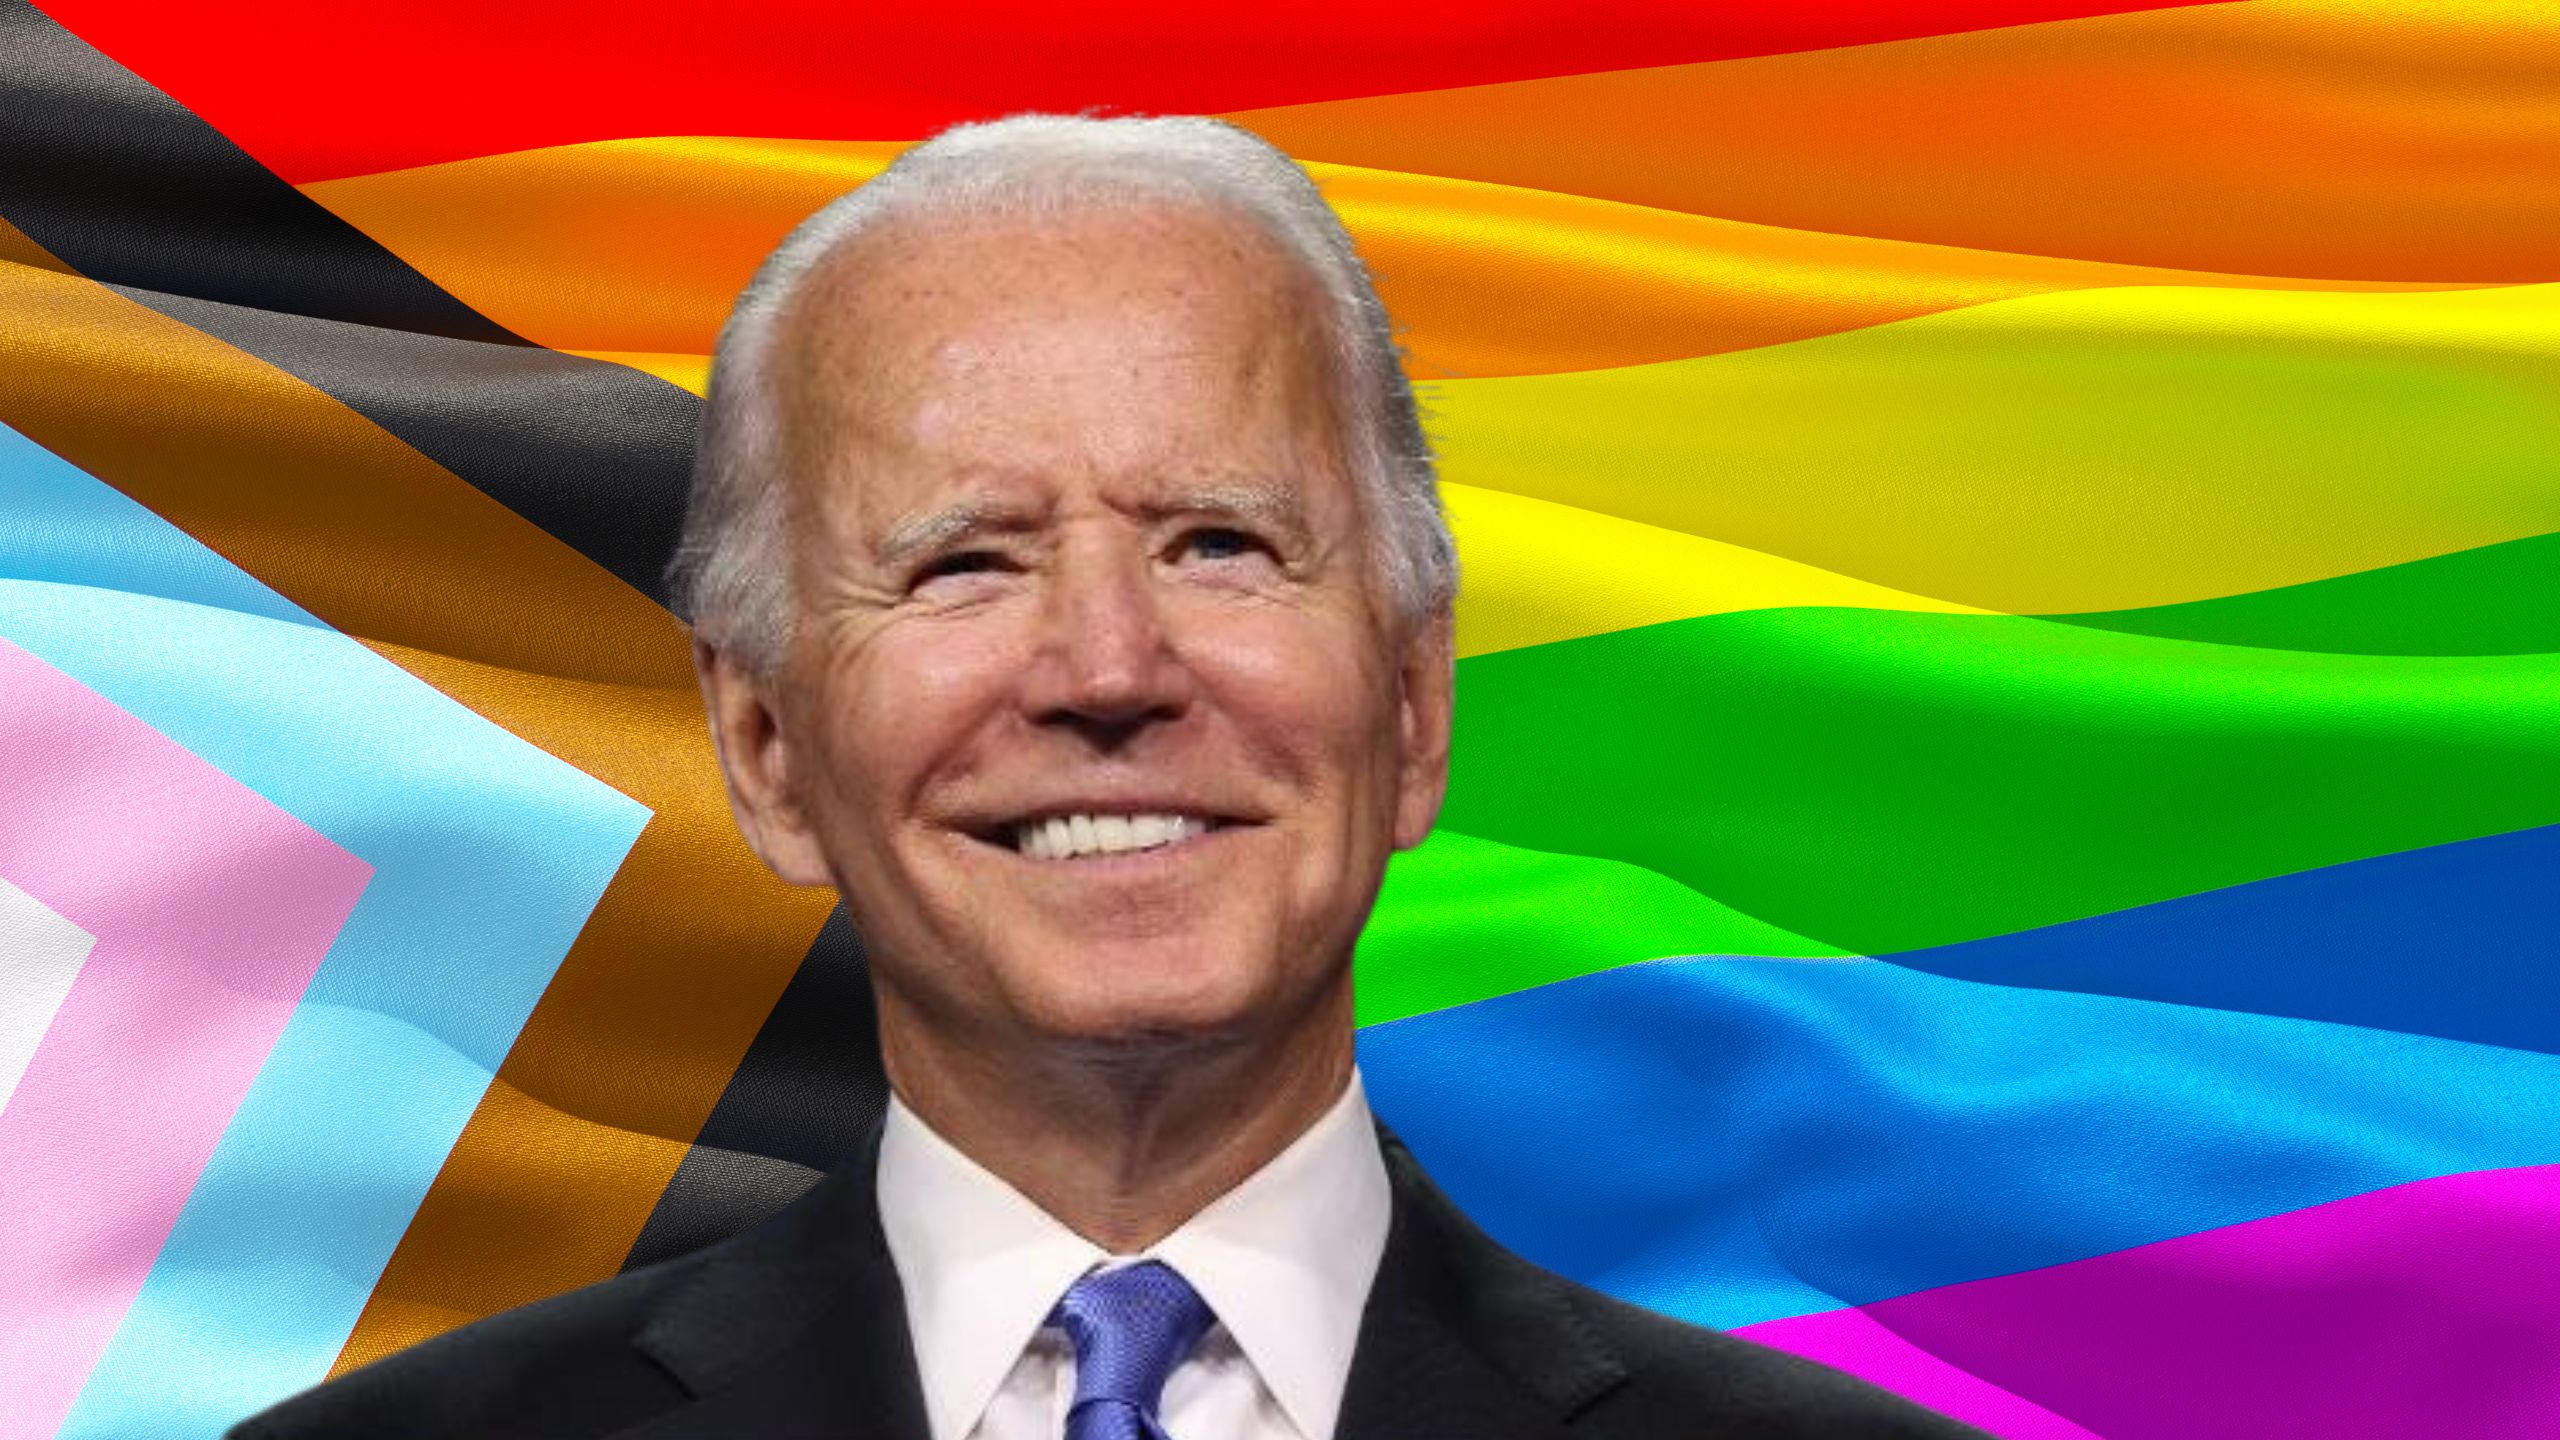 Biden’s flip-flop on LGBT matters exposes his money-driven motives.